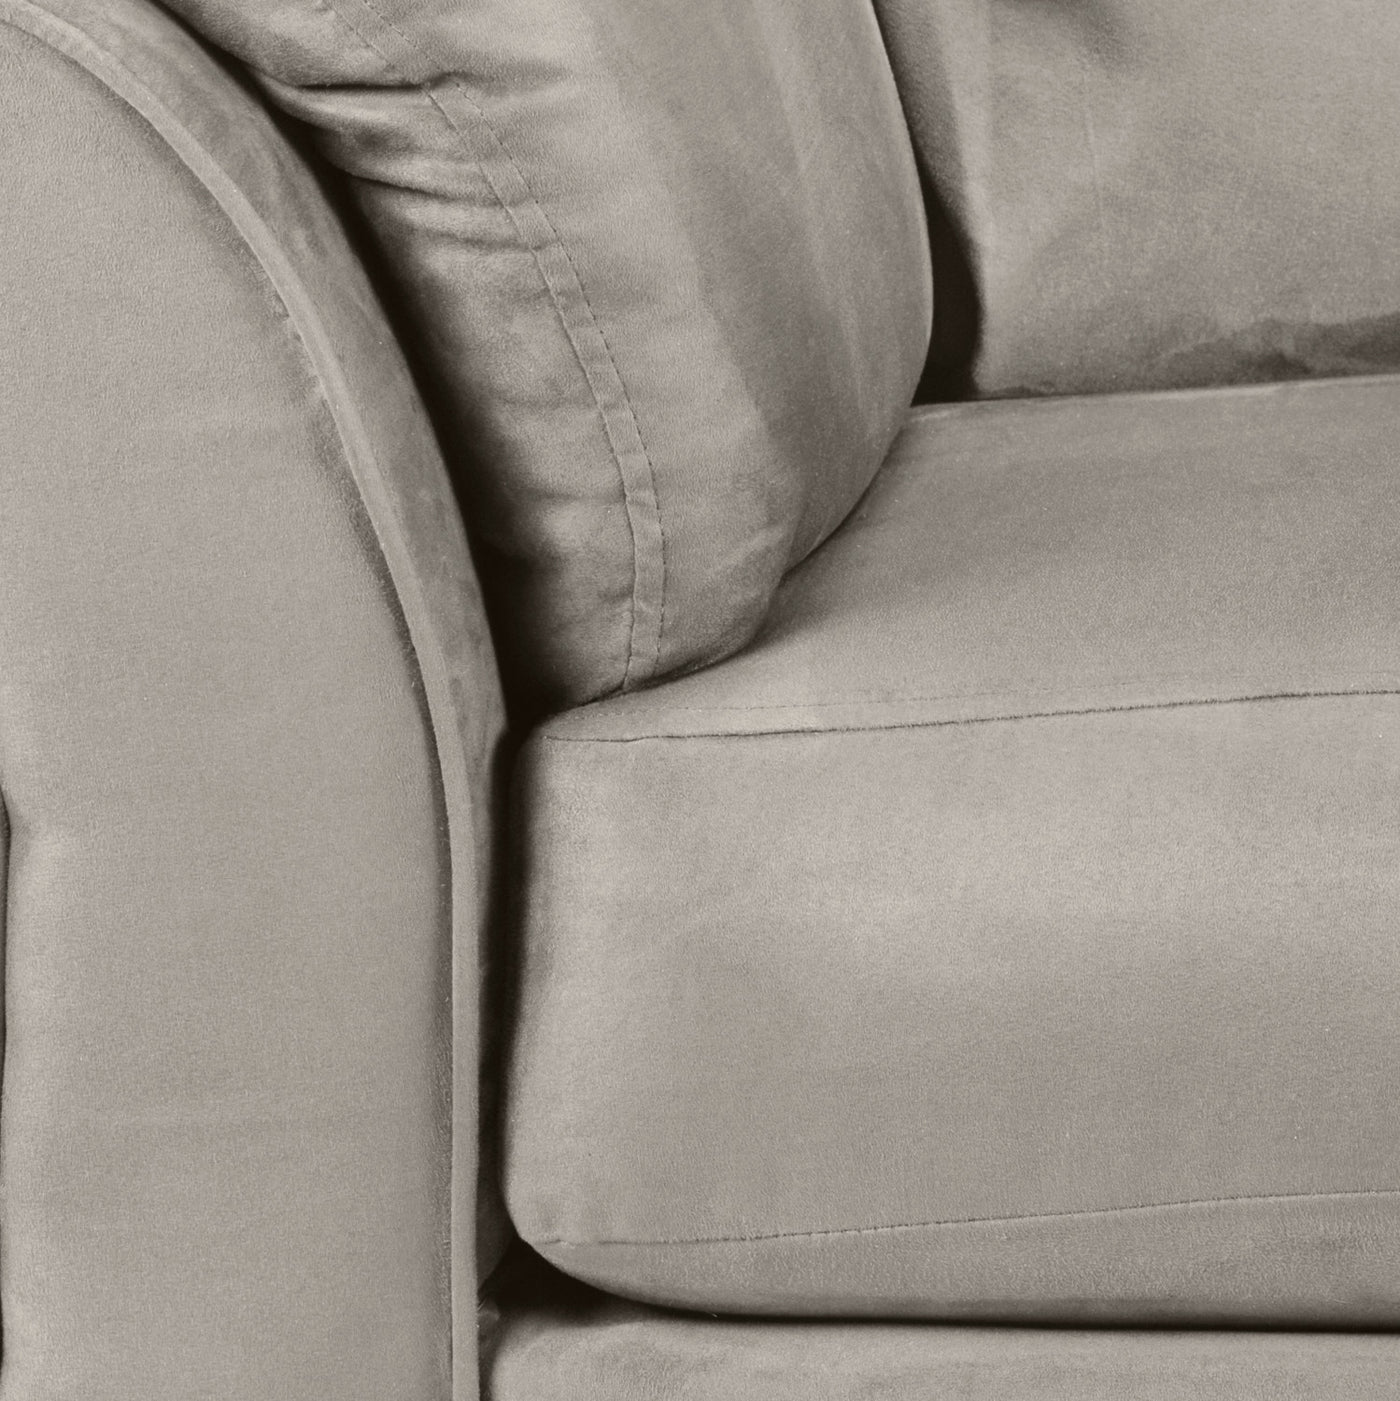 Collier Chair - Light Grey